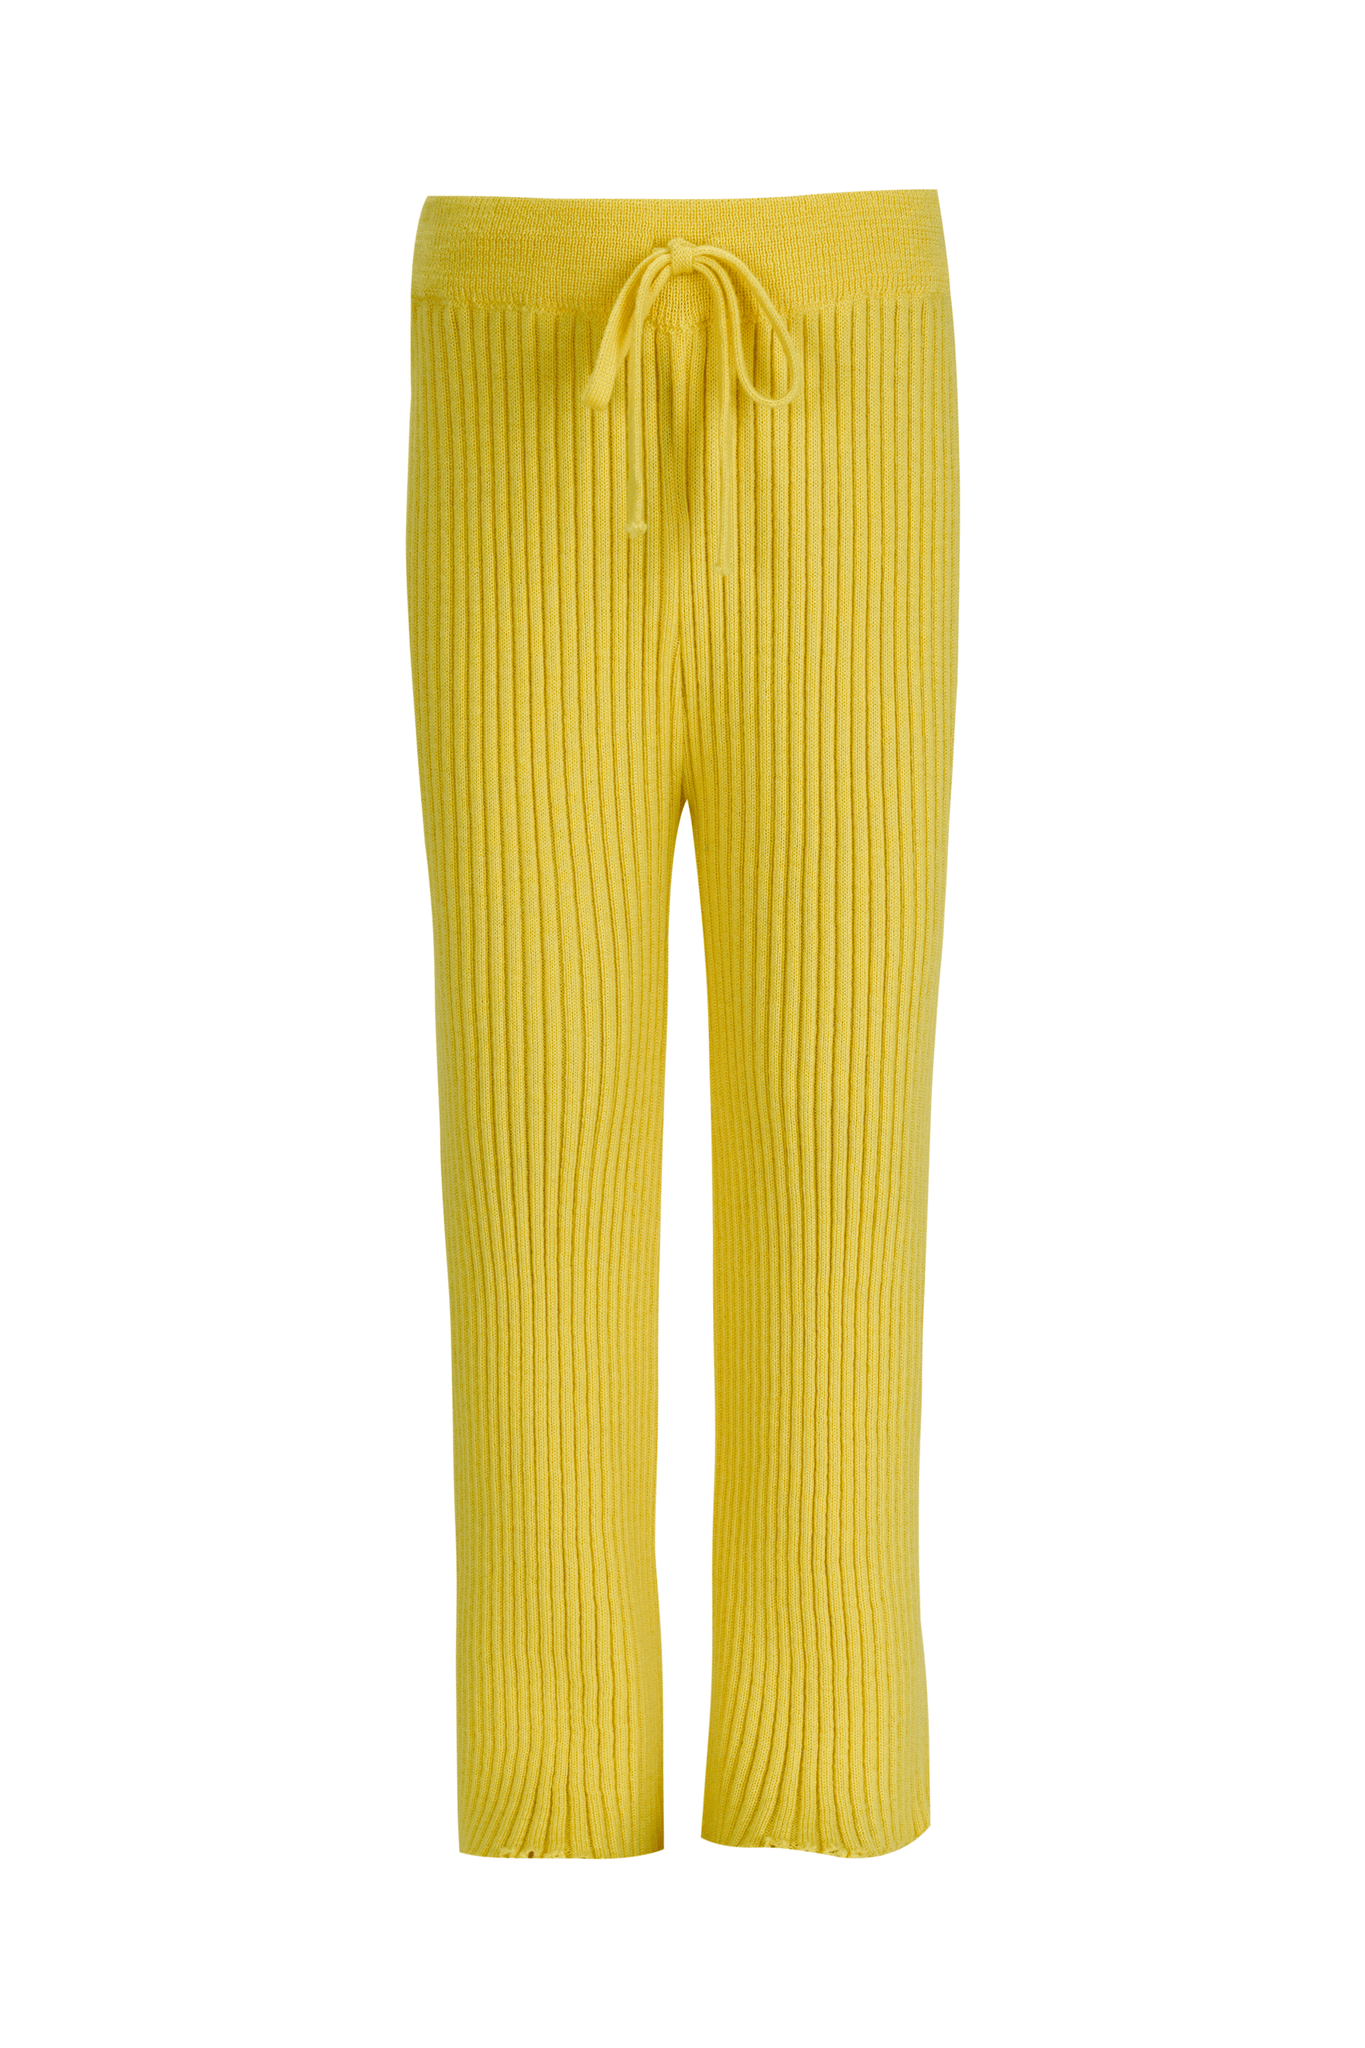 Wool Yellow Pants for Women for sale  eBay